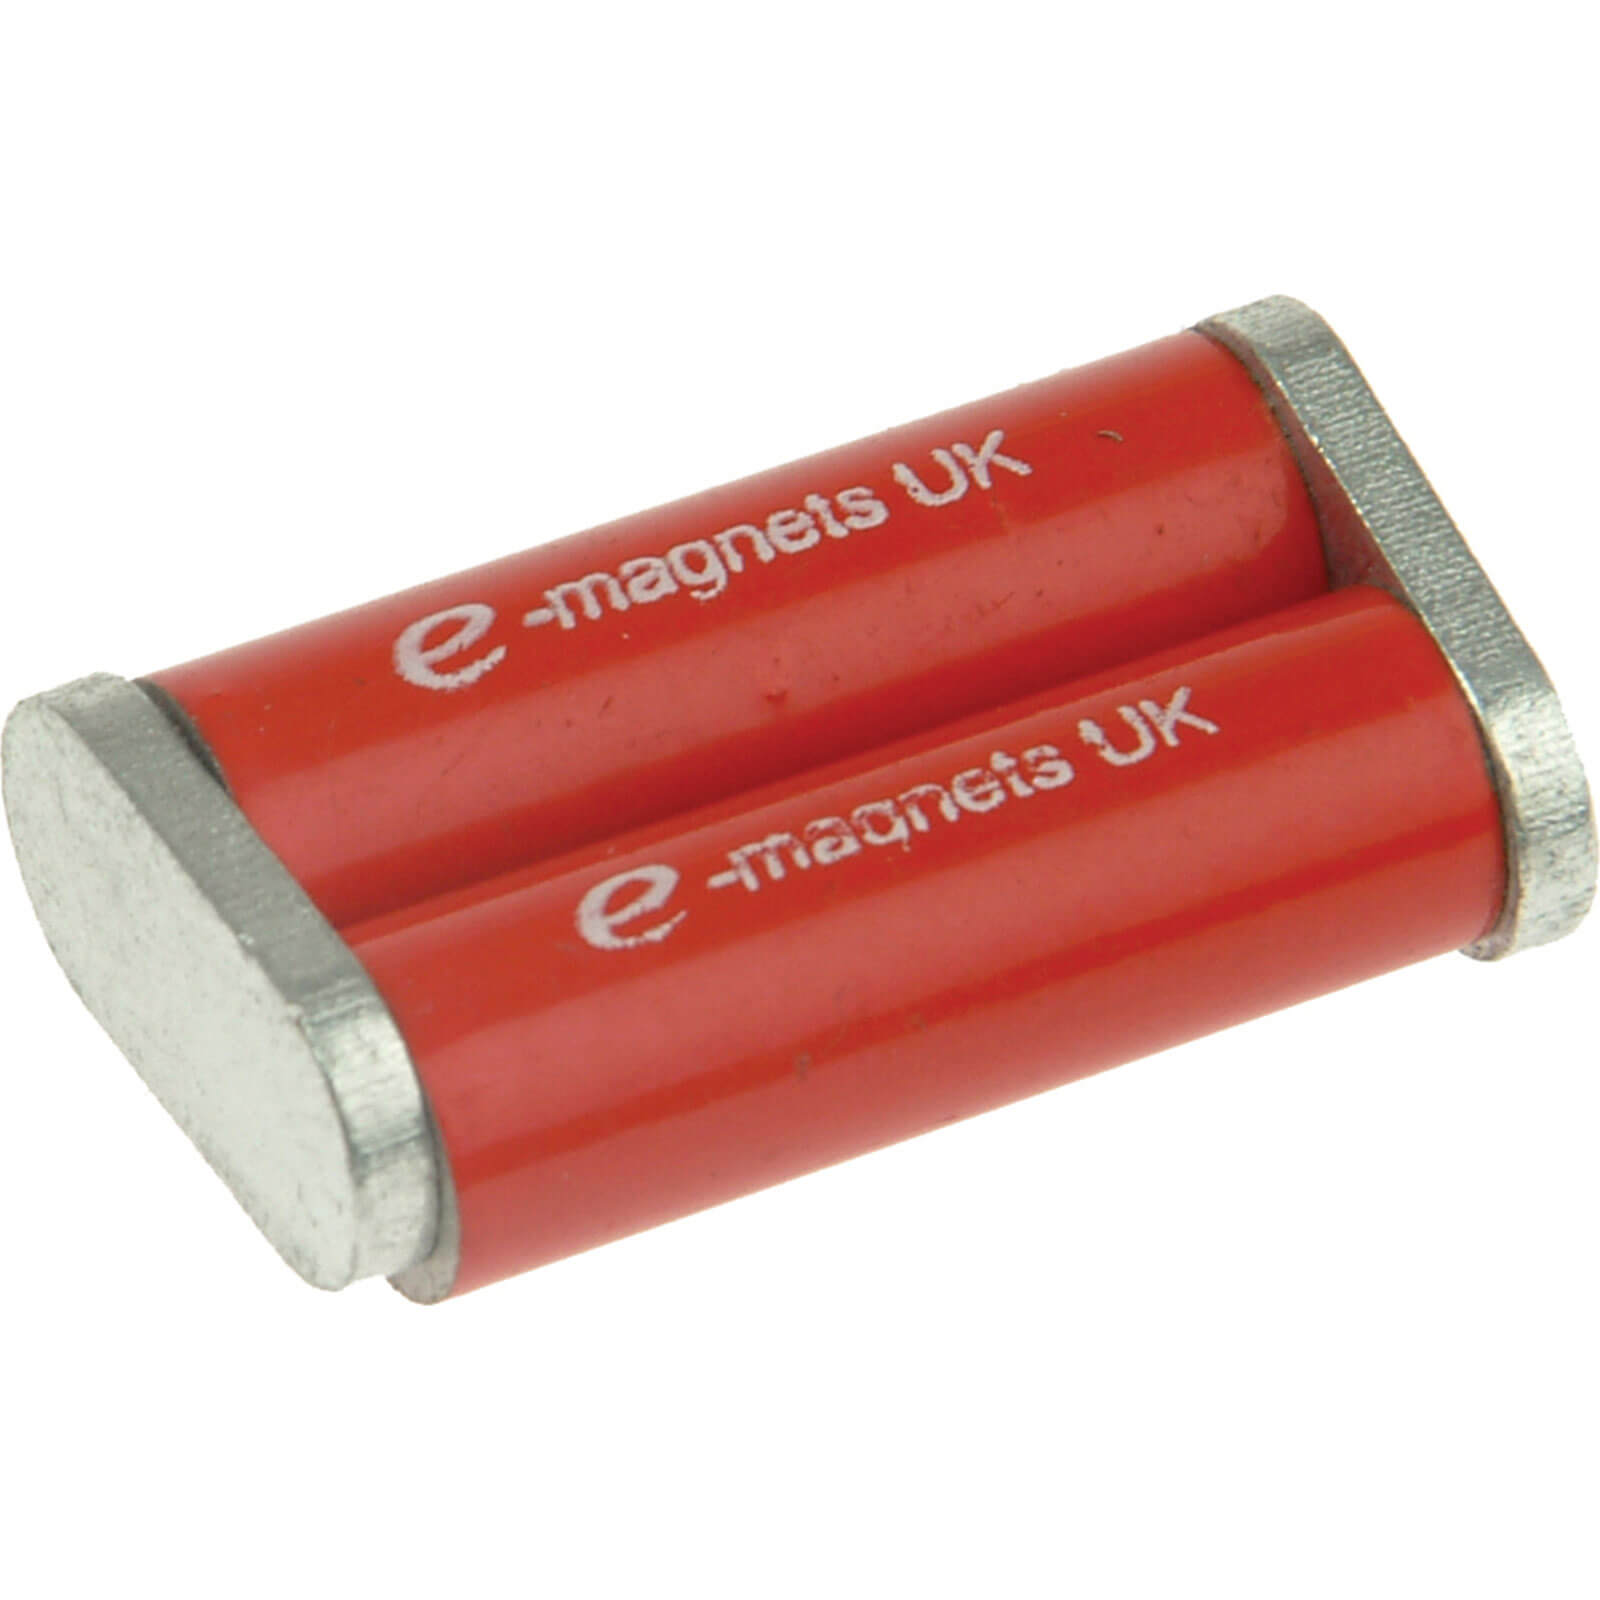 E Magnet 805 Bar Magnet 20mm x 6mm Dia